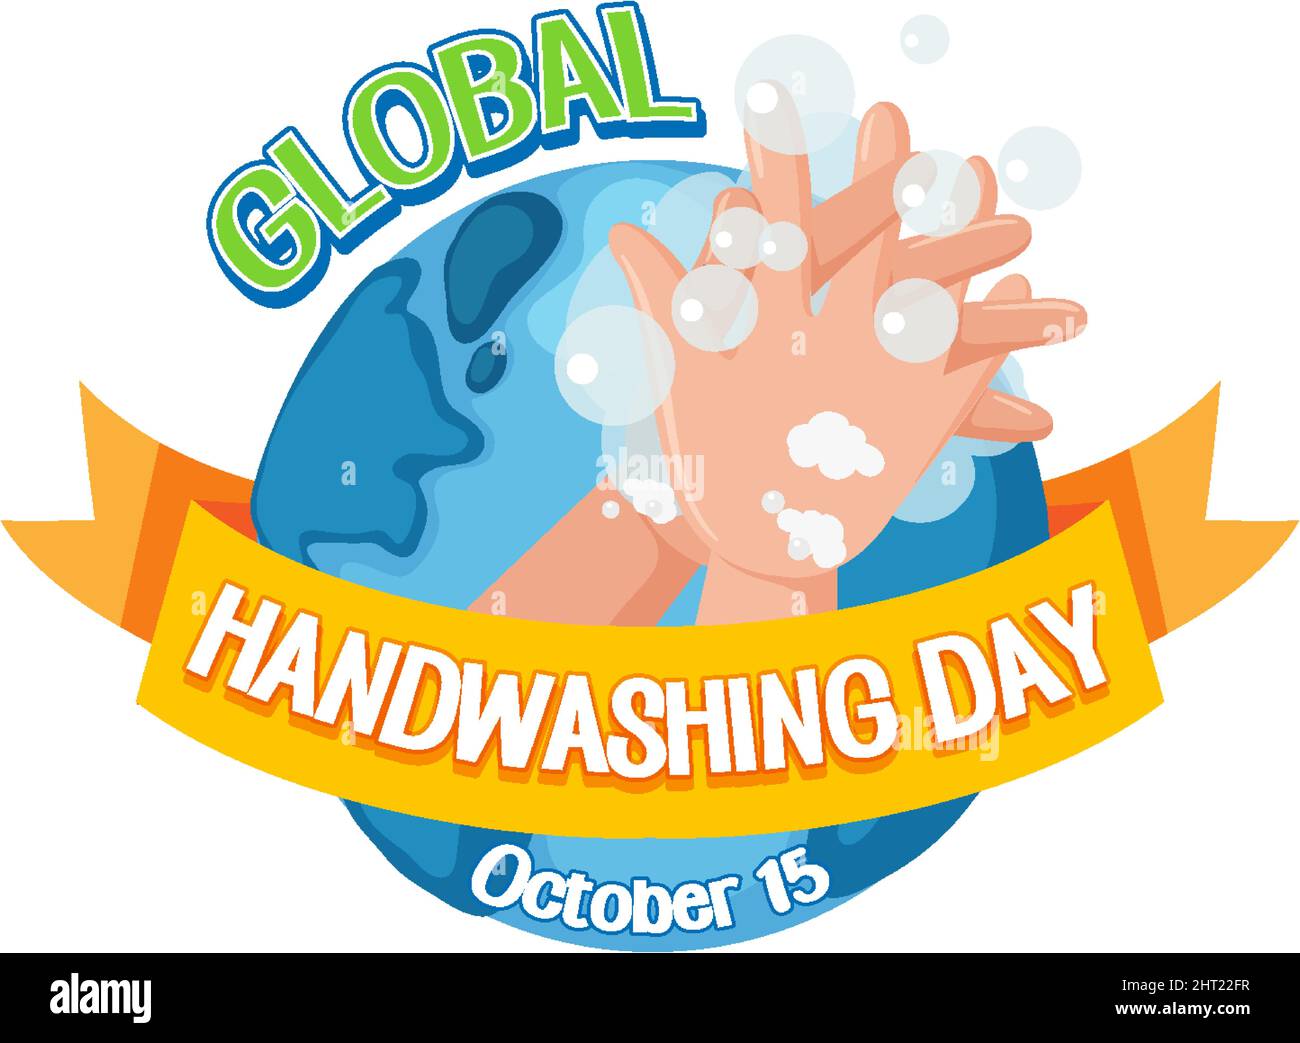 Global Handwashing Day banner design illustration Stock Vector Image